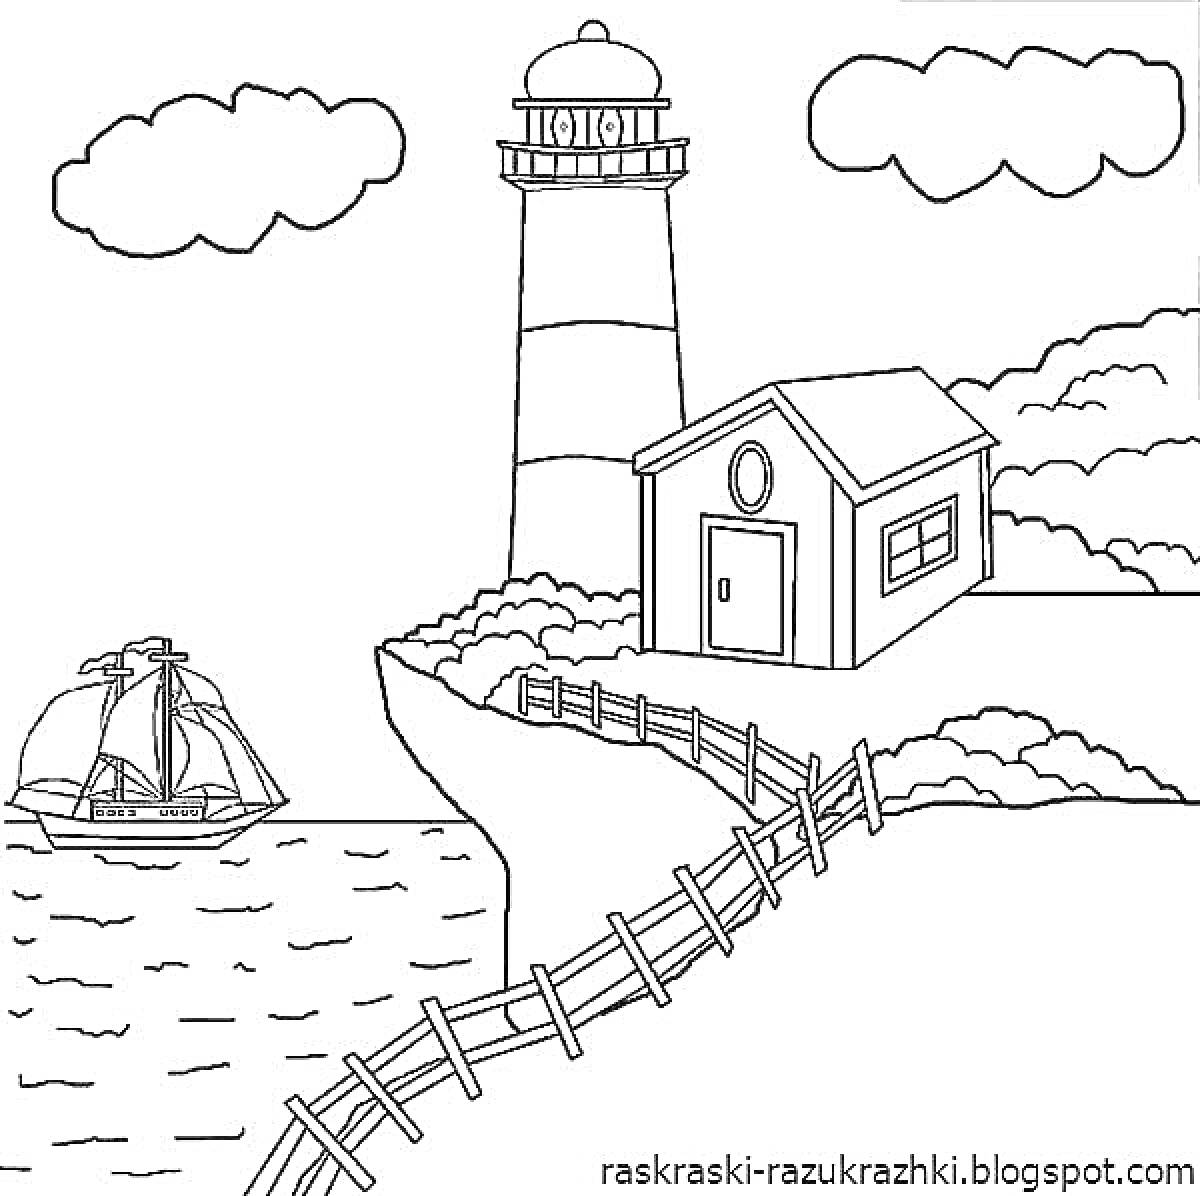 Раскраска Маяк на утесе с домиком, кораблем, морем и облаками